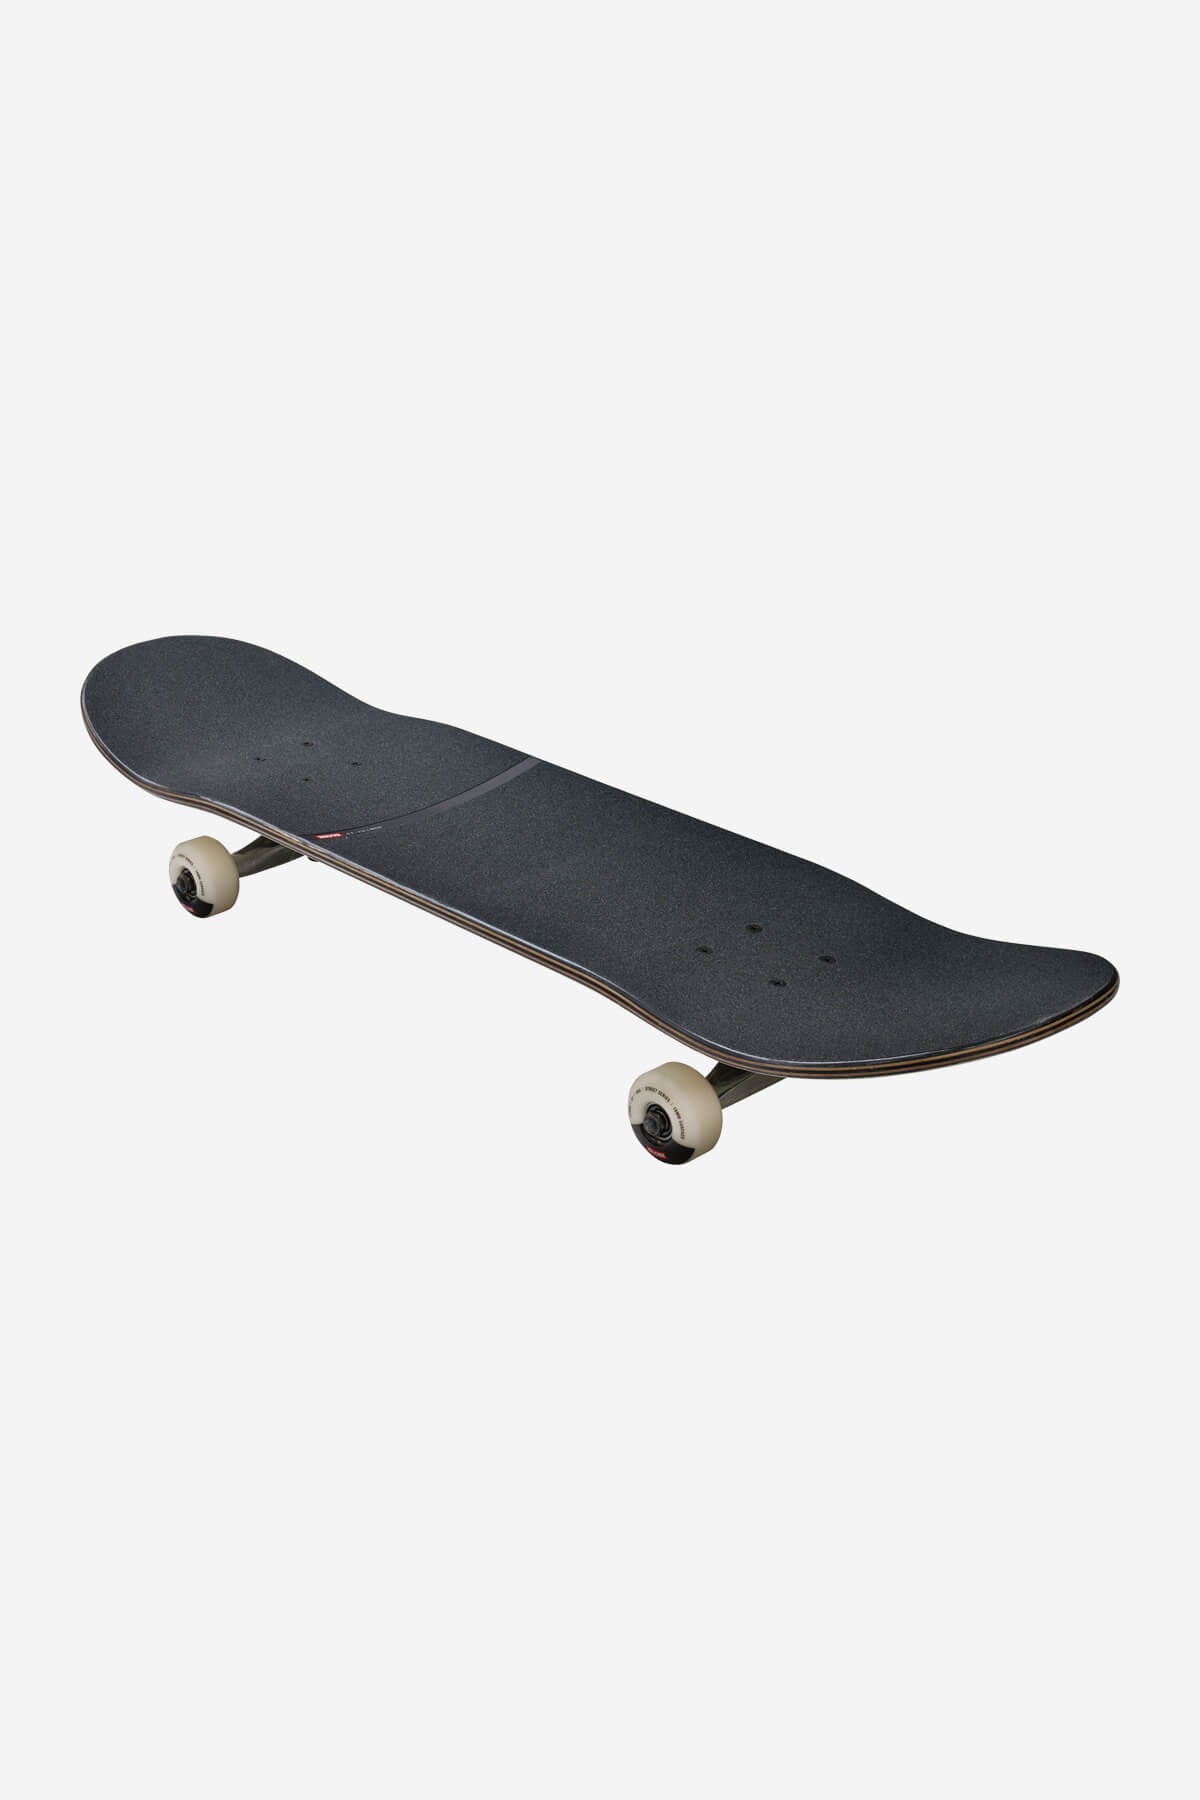 g1 lineform 2 off white 8.0" complete skateboard